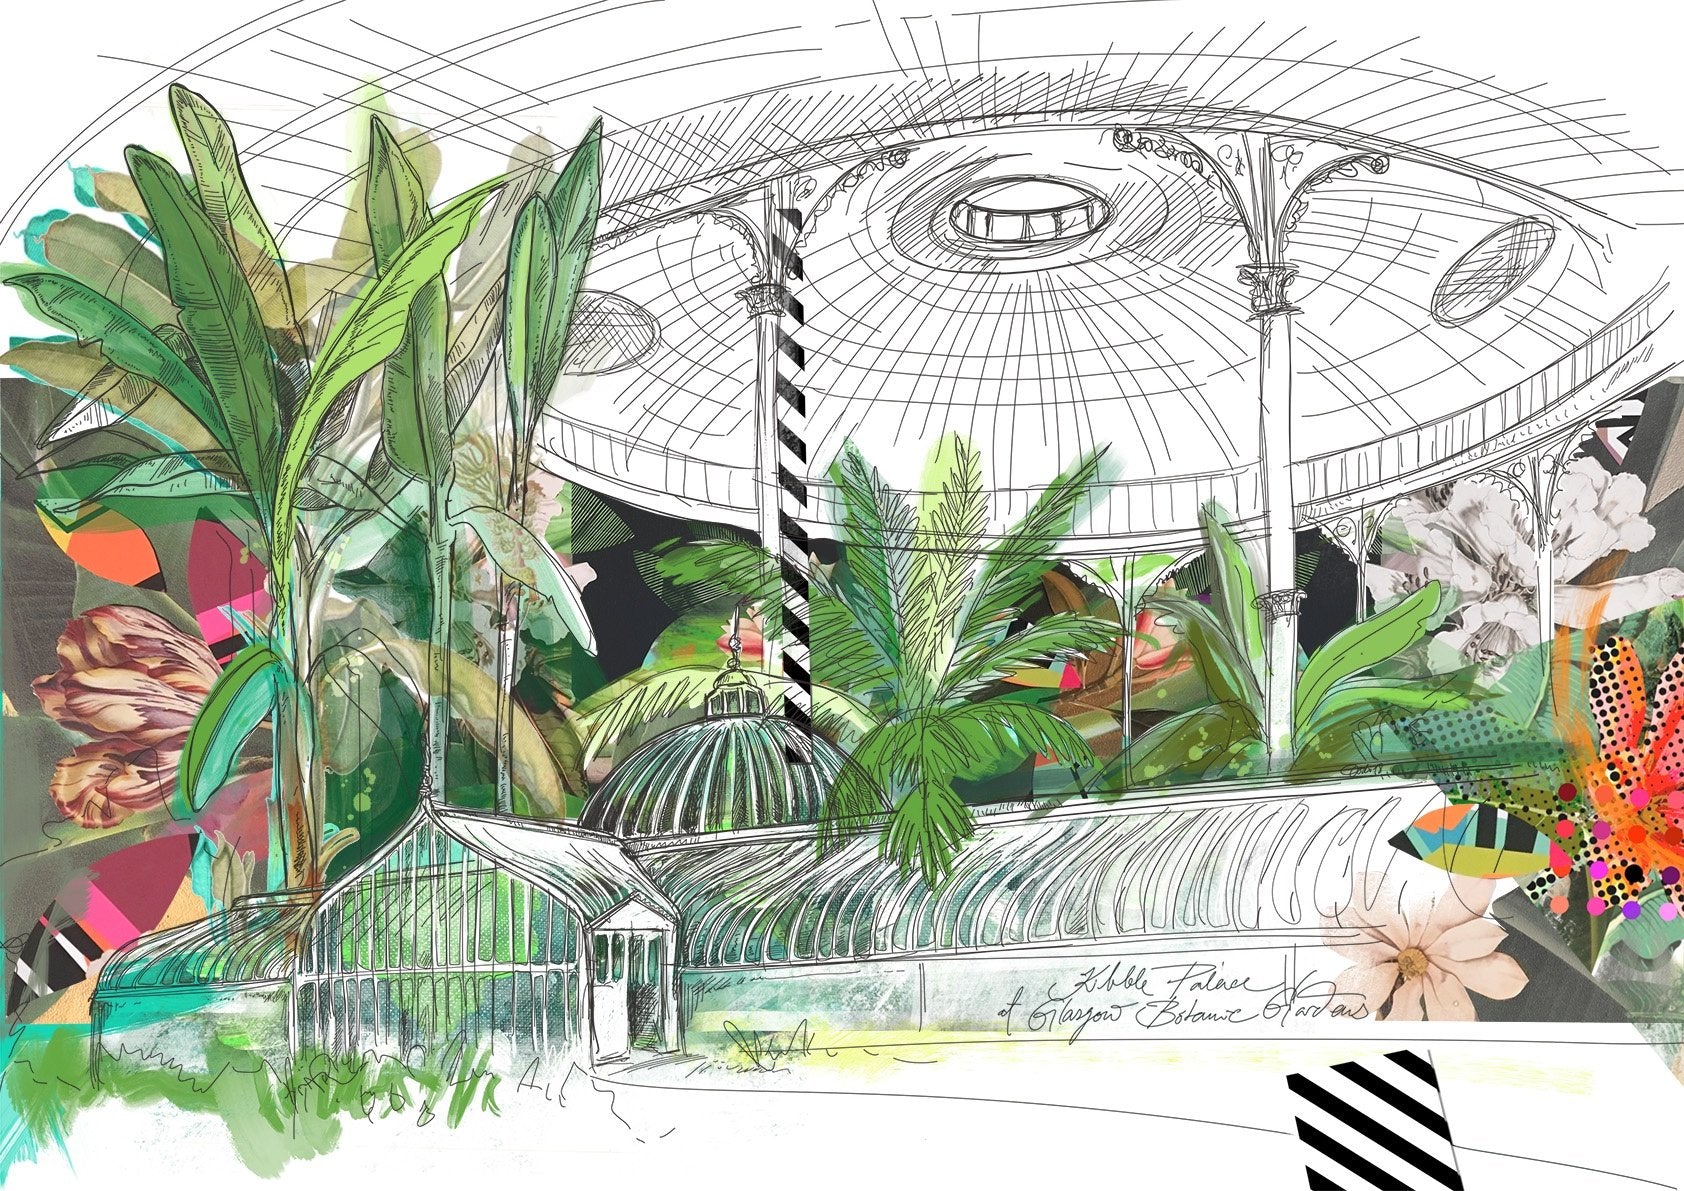 Kibble Palace of Glasgow Botanic Gardens A2 Print